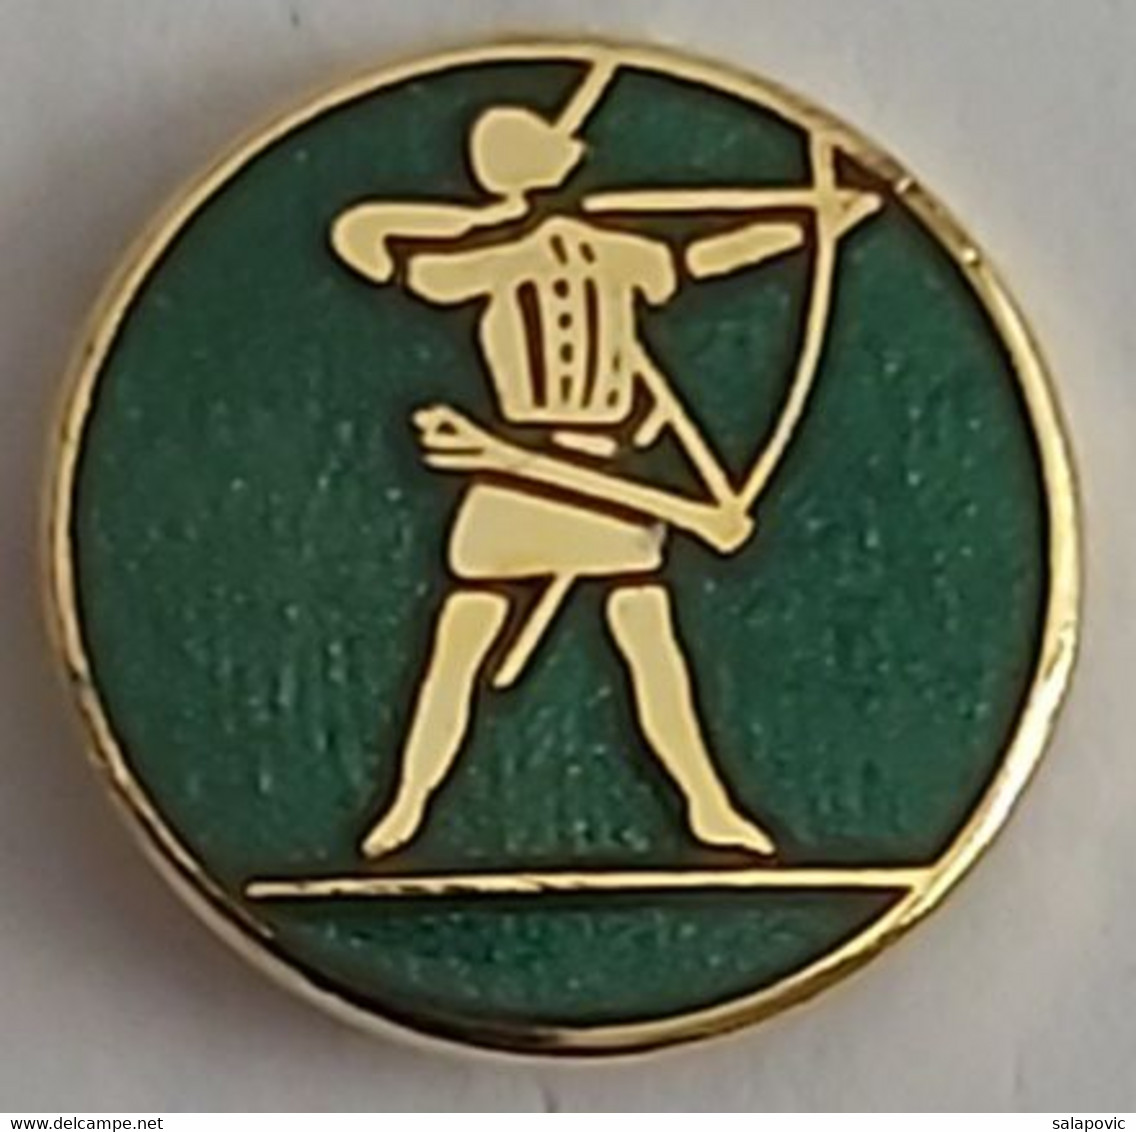 Ireland Shooting Federation Association Union Archery PIN A8/7 - Tir à L'Arc